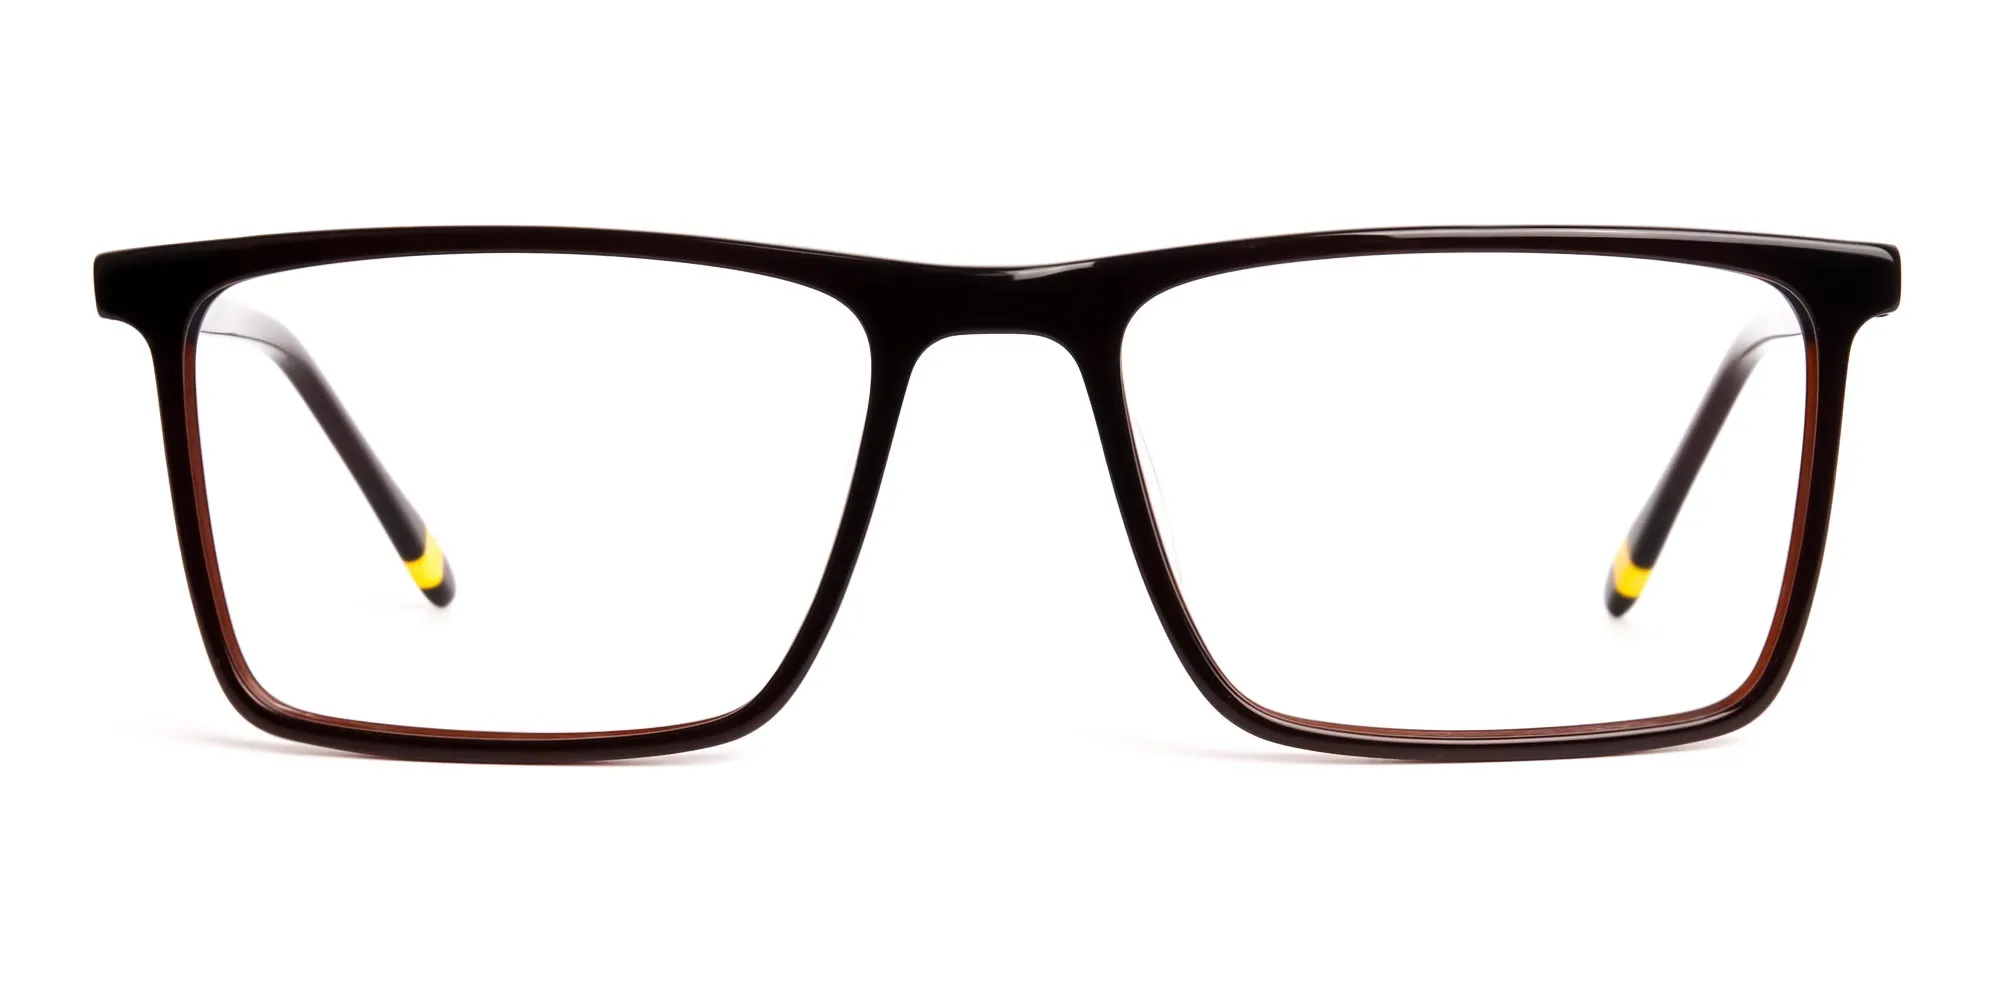 classic dark brown full rim rectangular glasses frames-2